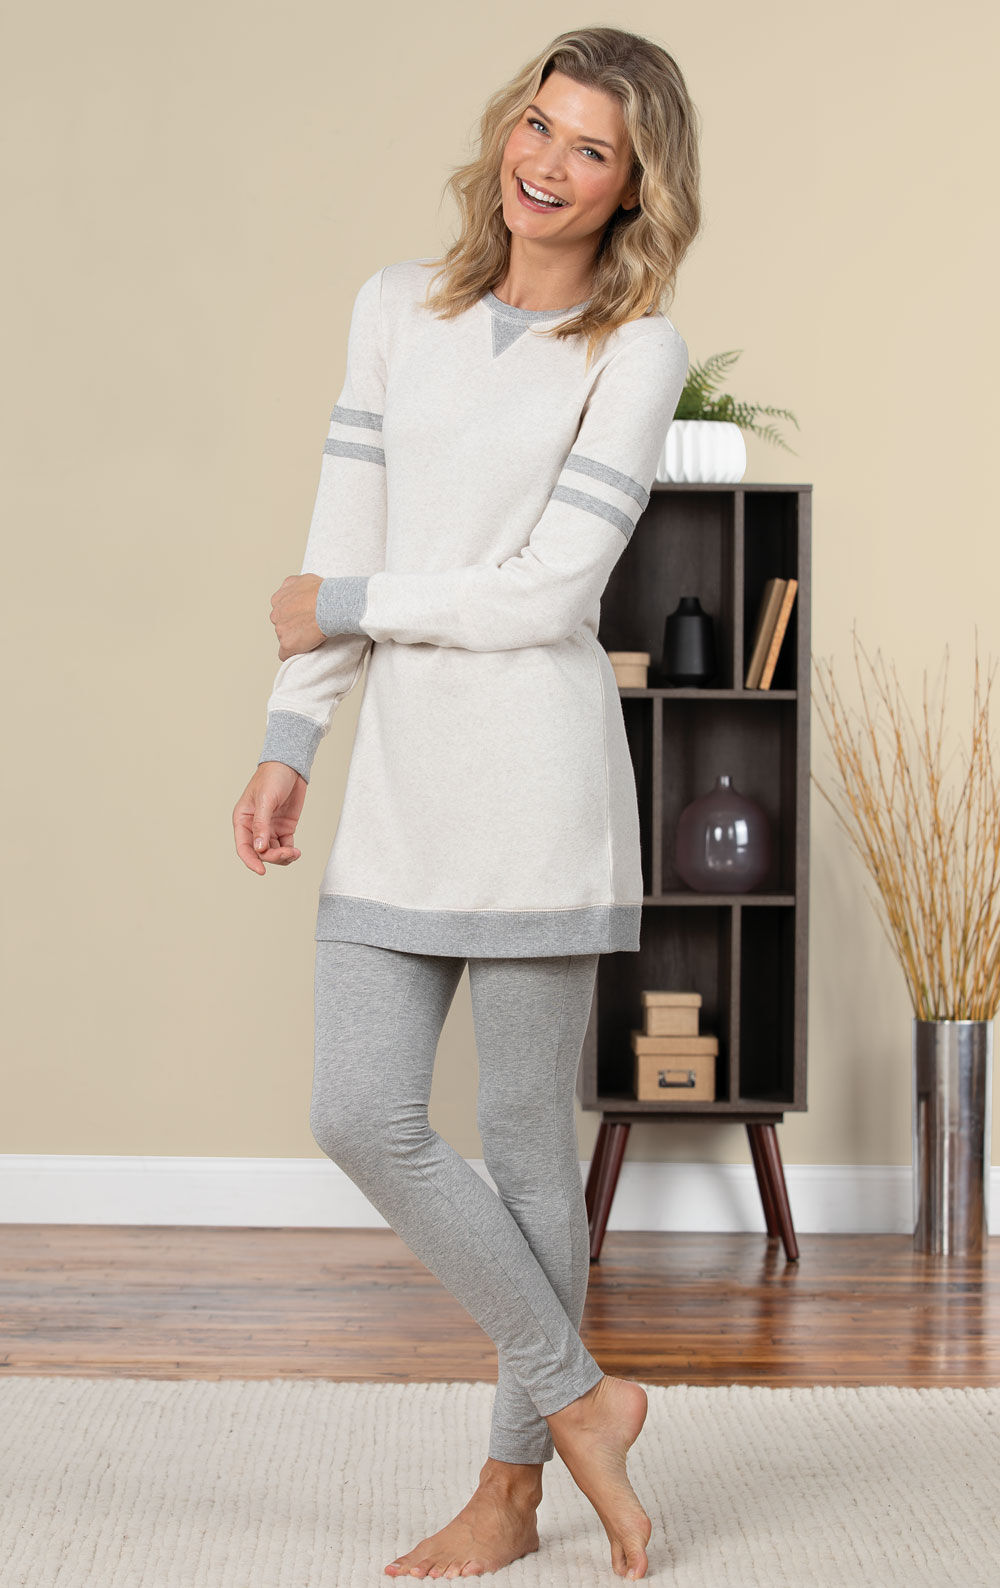 COLORFULLEAF Soft Pajamas for Women Short Sleeve Tunic Top and Leggings Pajama Set 